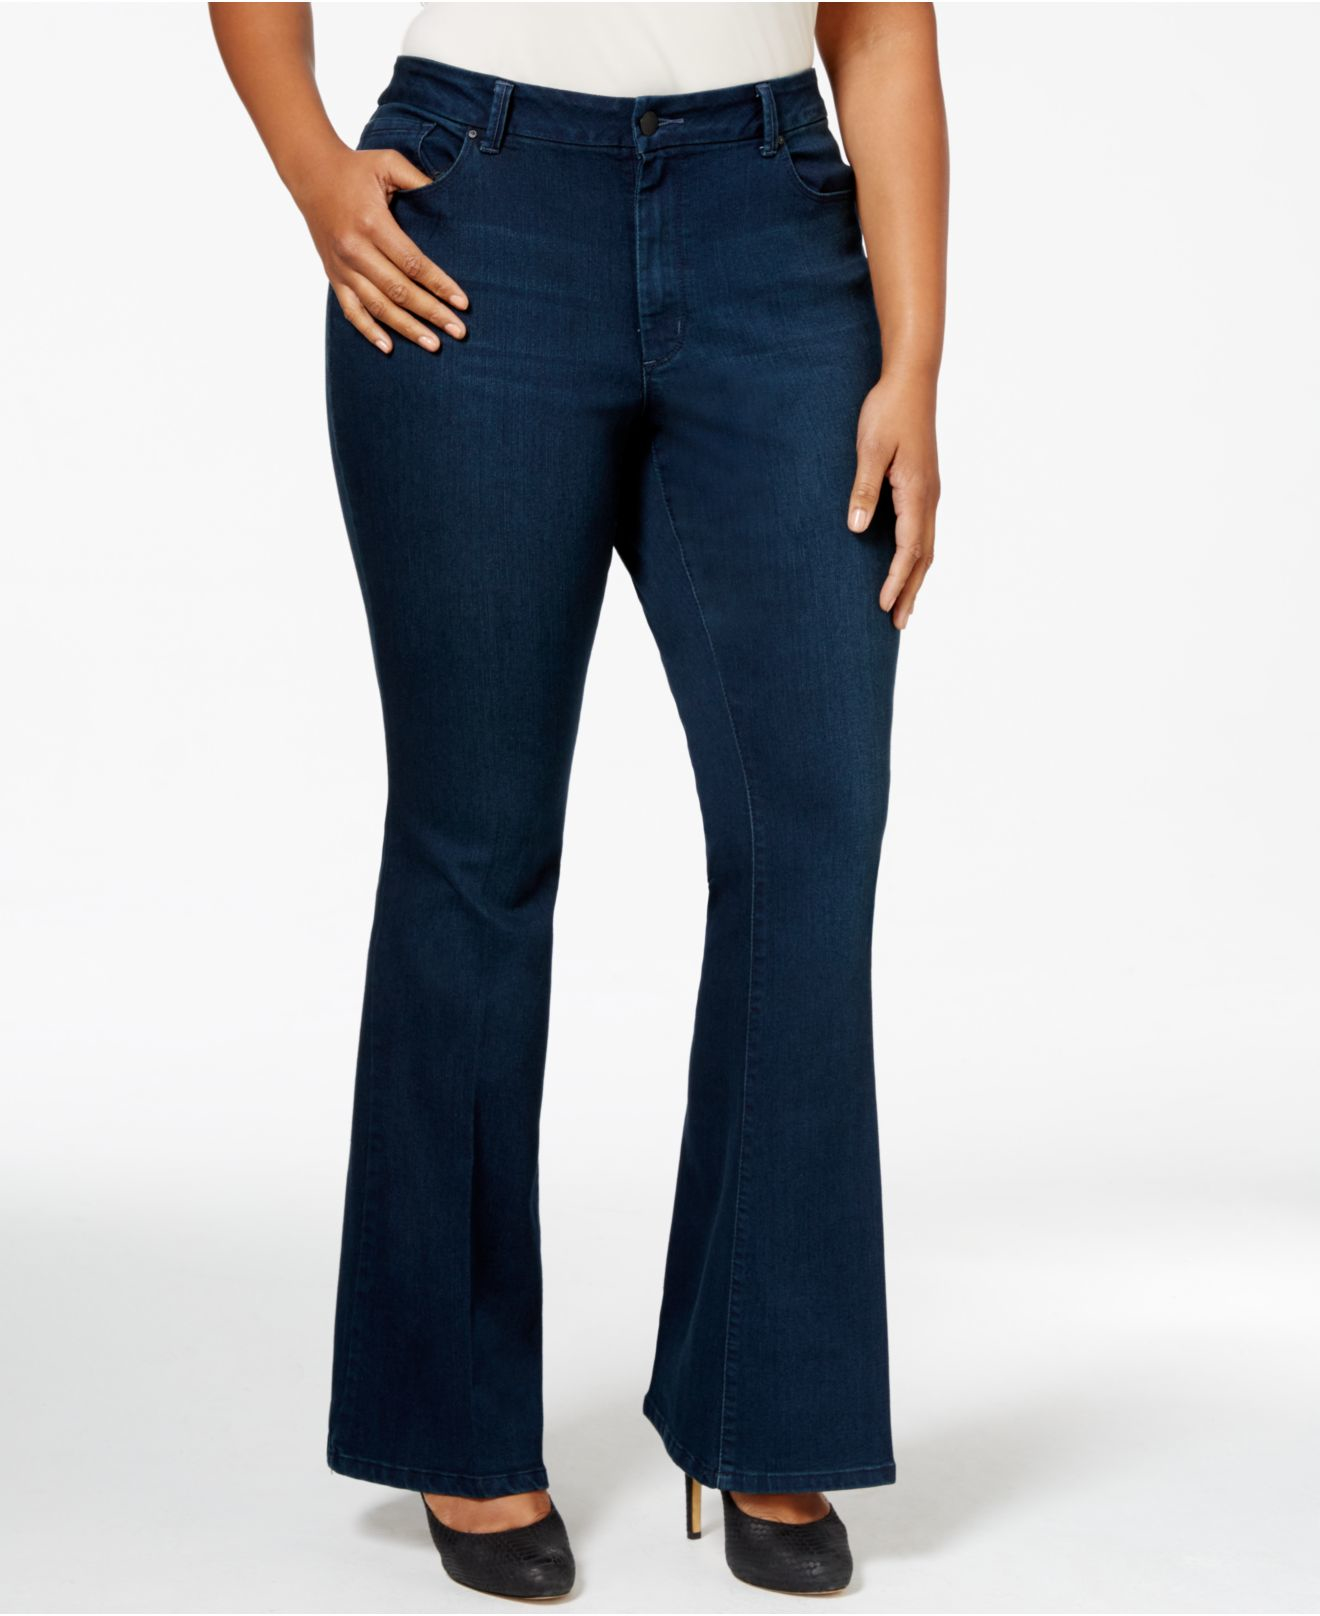 Lyst - Jessica Simpson Plus Size Flare-leg Freesia Wash Jeans in Blue